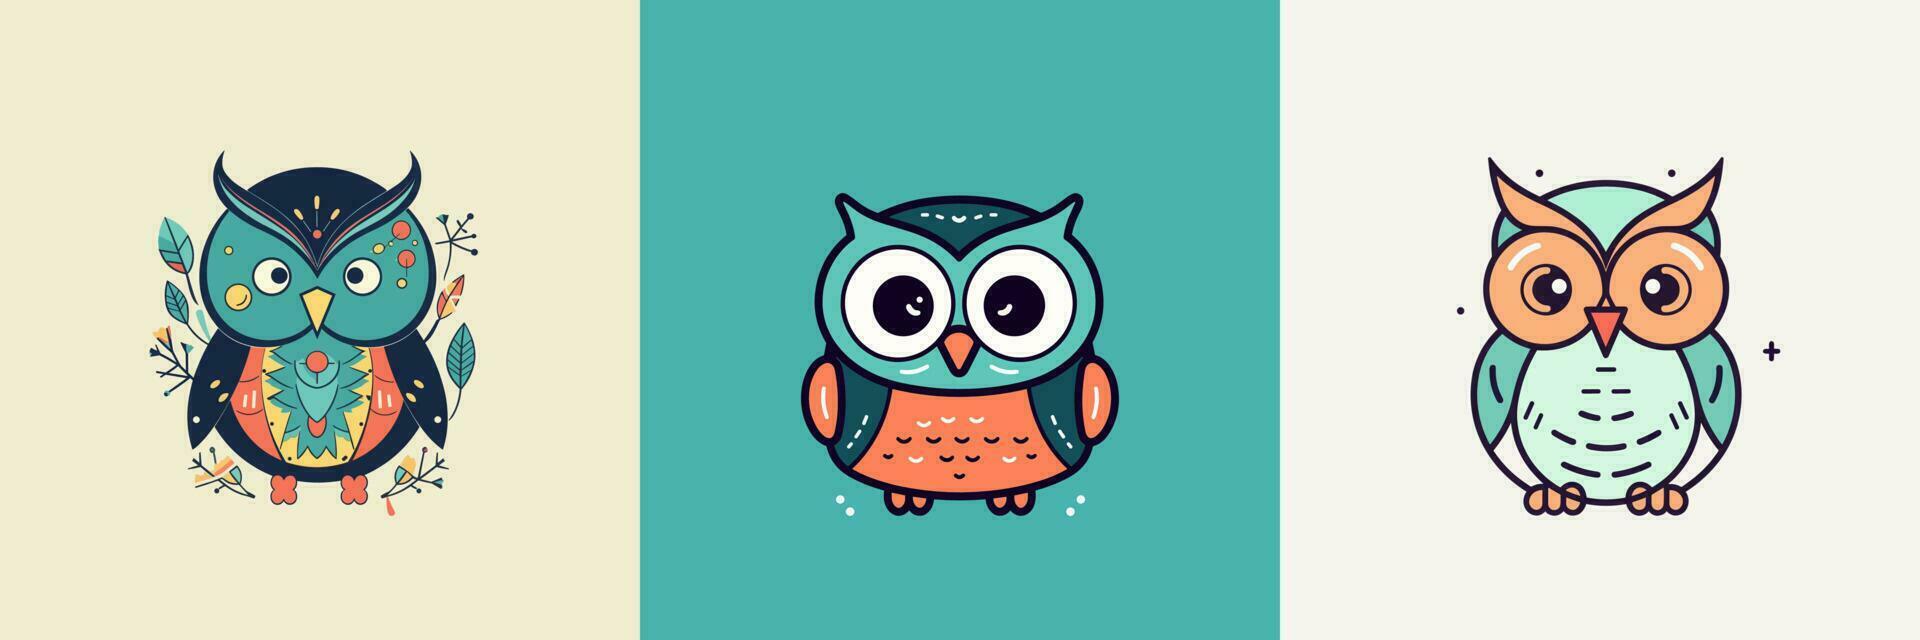 Cute baby owl mascot kawaii cartoon bird illustration set collection vector